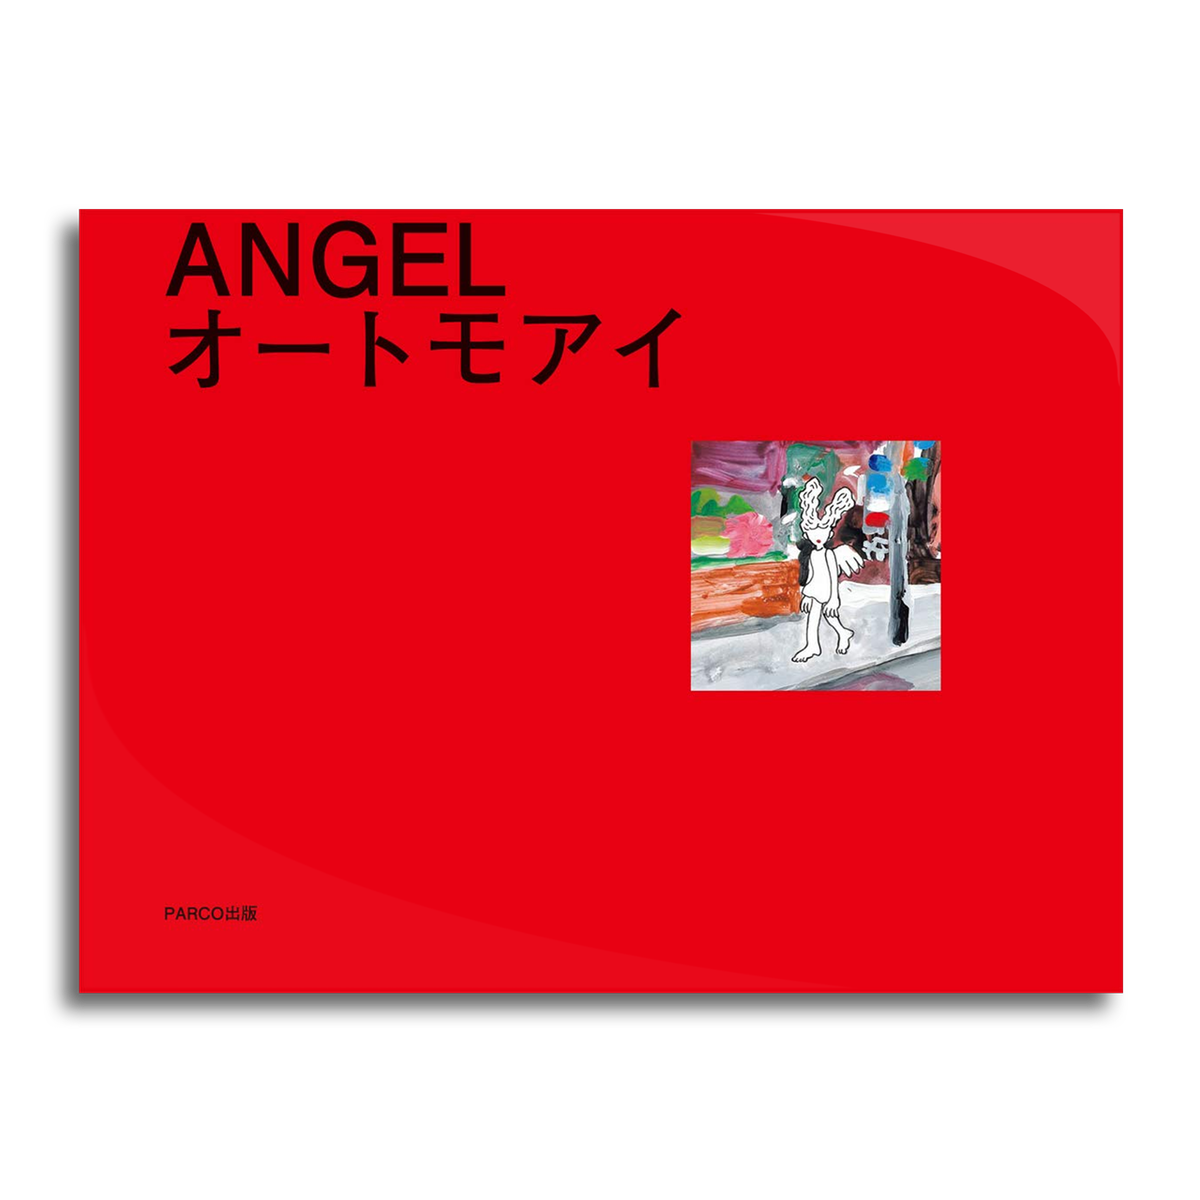 Angel オートモアイ 本屋 Rewind リワインド Online Store 東京 自由が丘